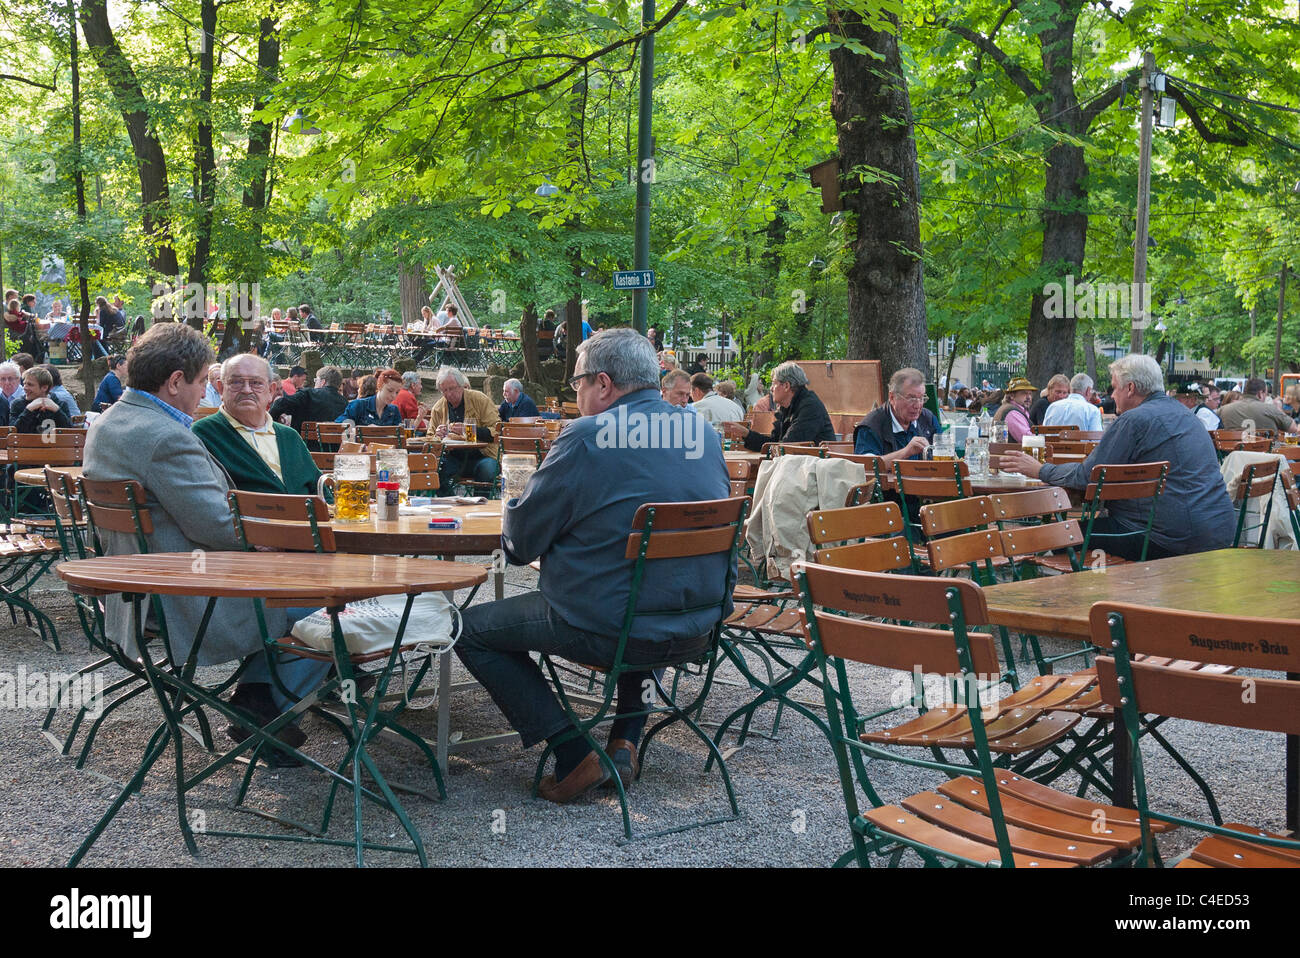 Men & women drink beer from very large beer steins at the Augustiner-Keller beer garden in Munich, Germany under chestnut trees. Stock Photo